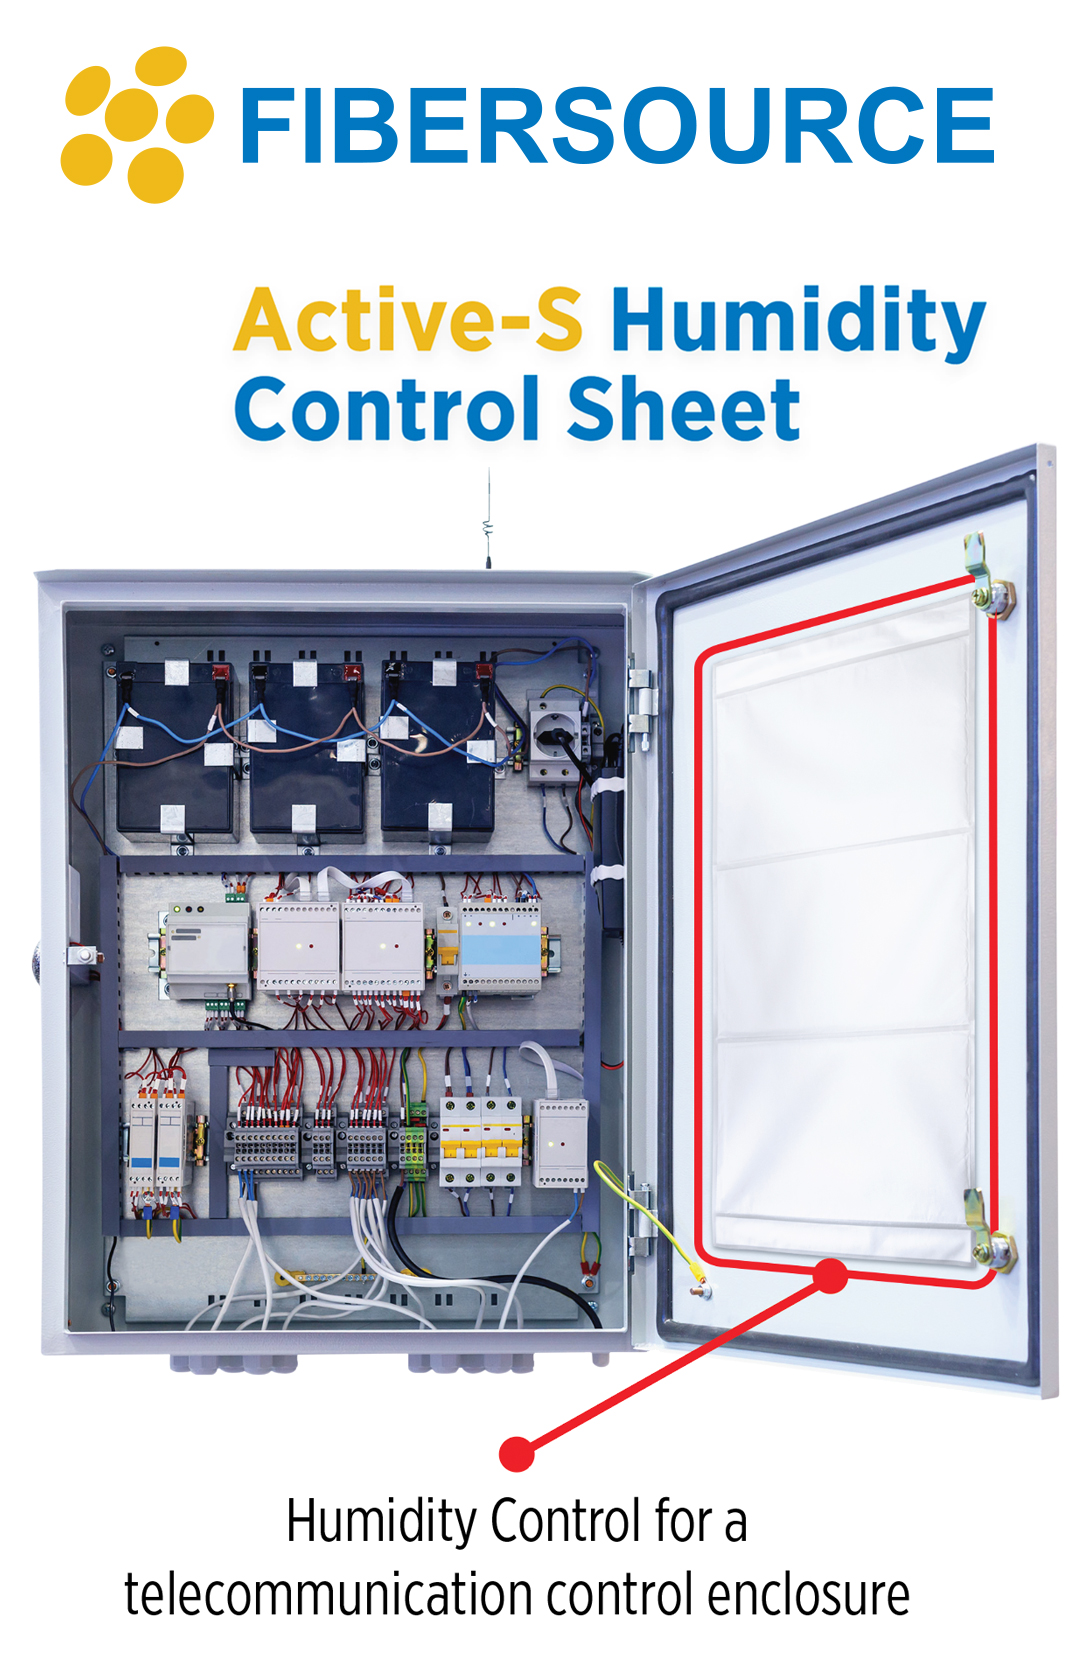 Humidity Control Sheets Protect Sensitive Equipment